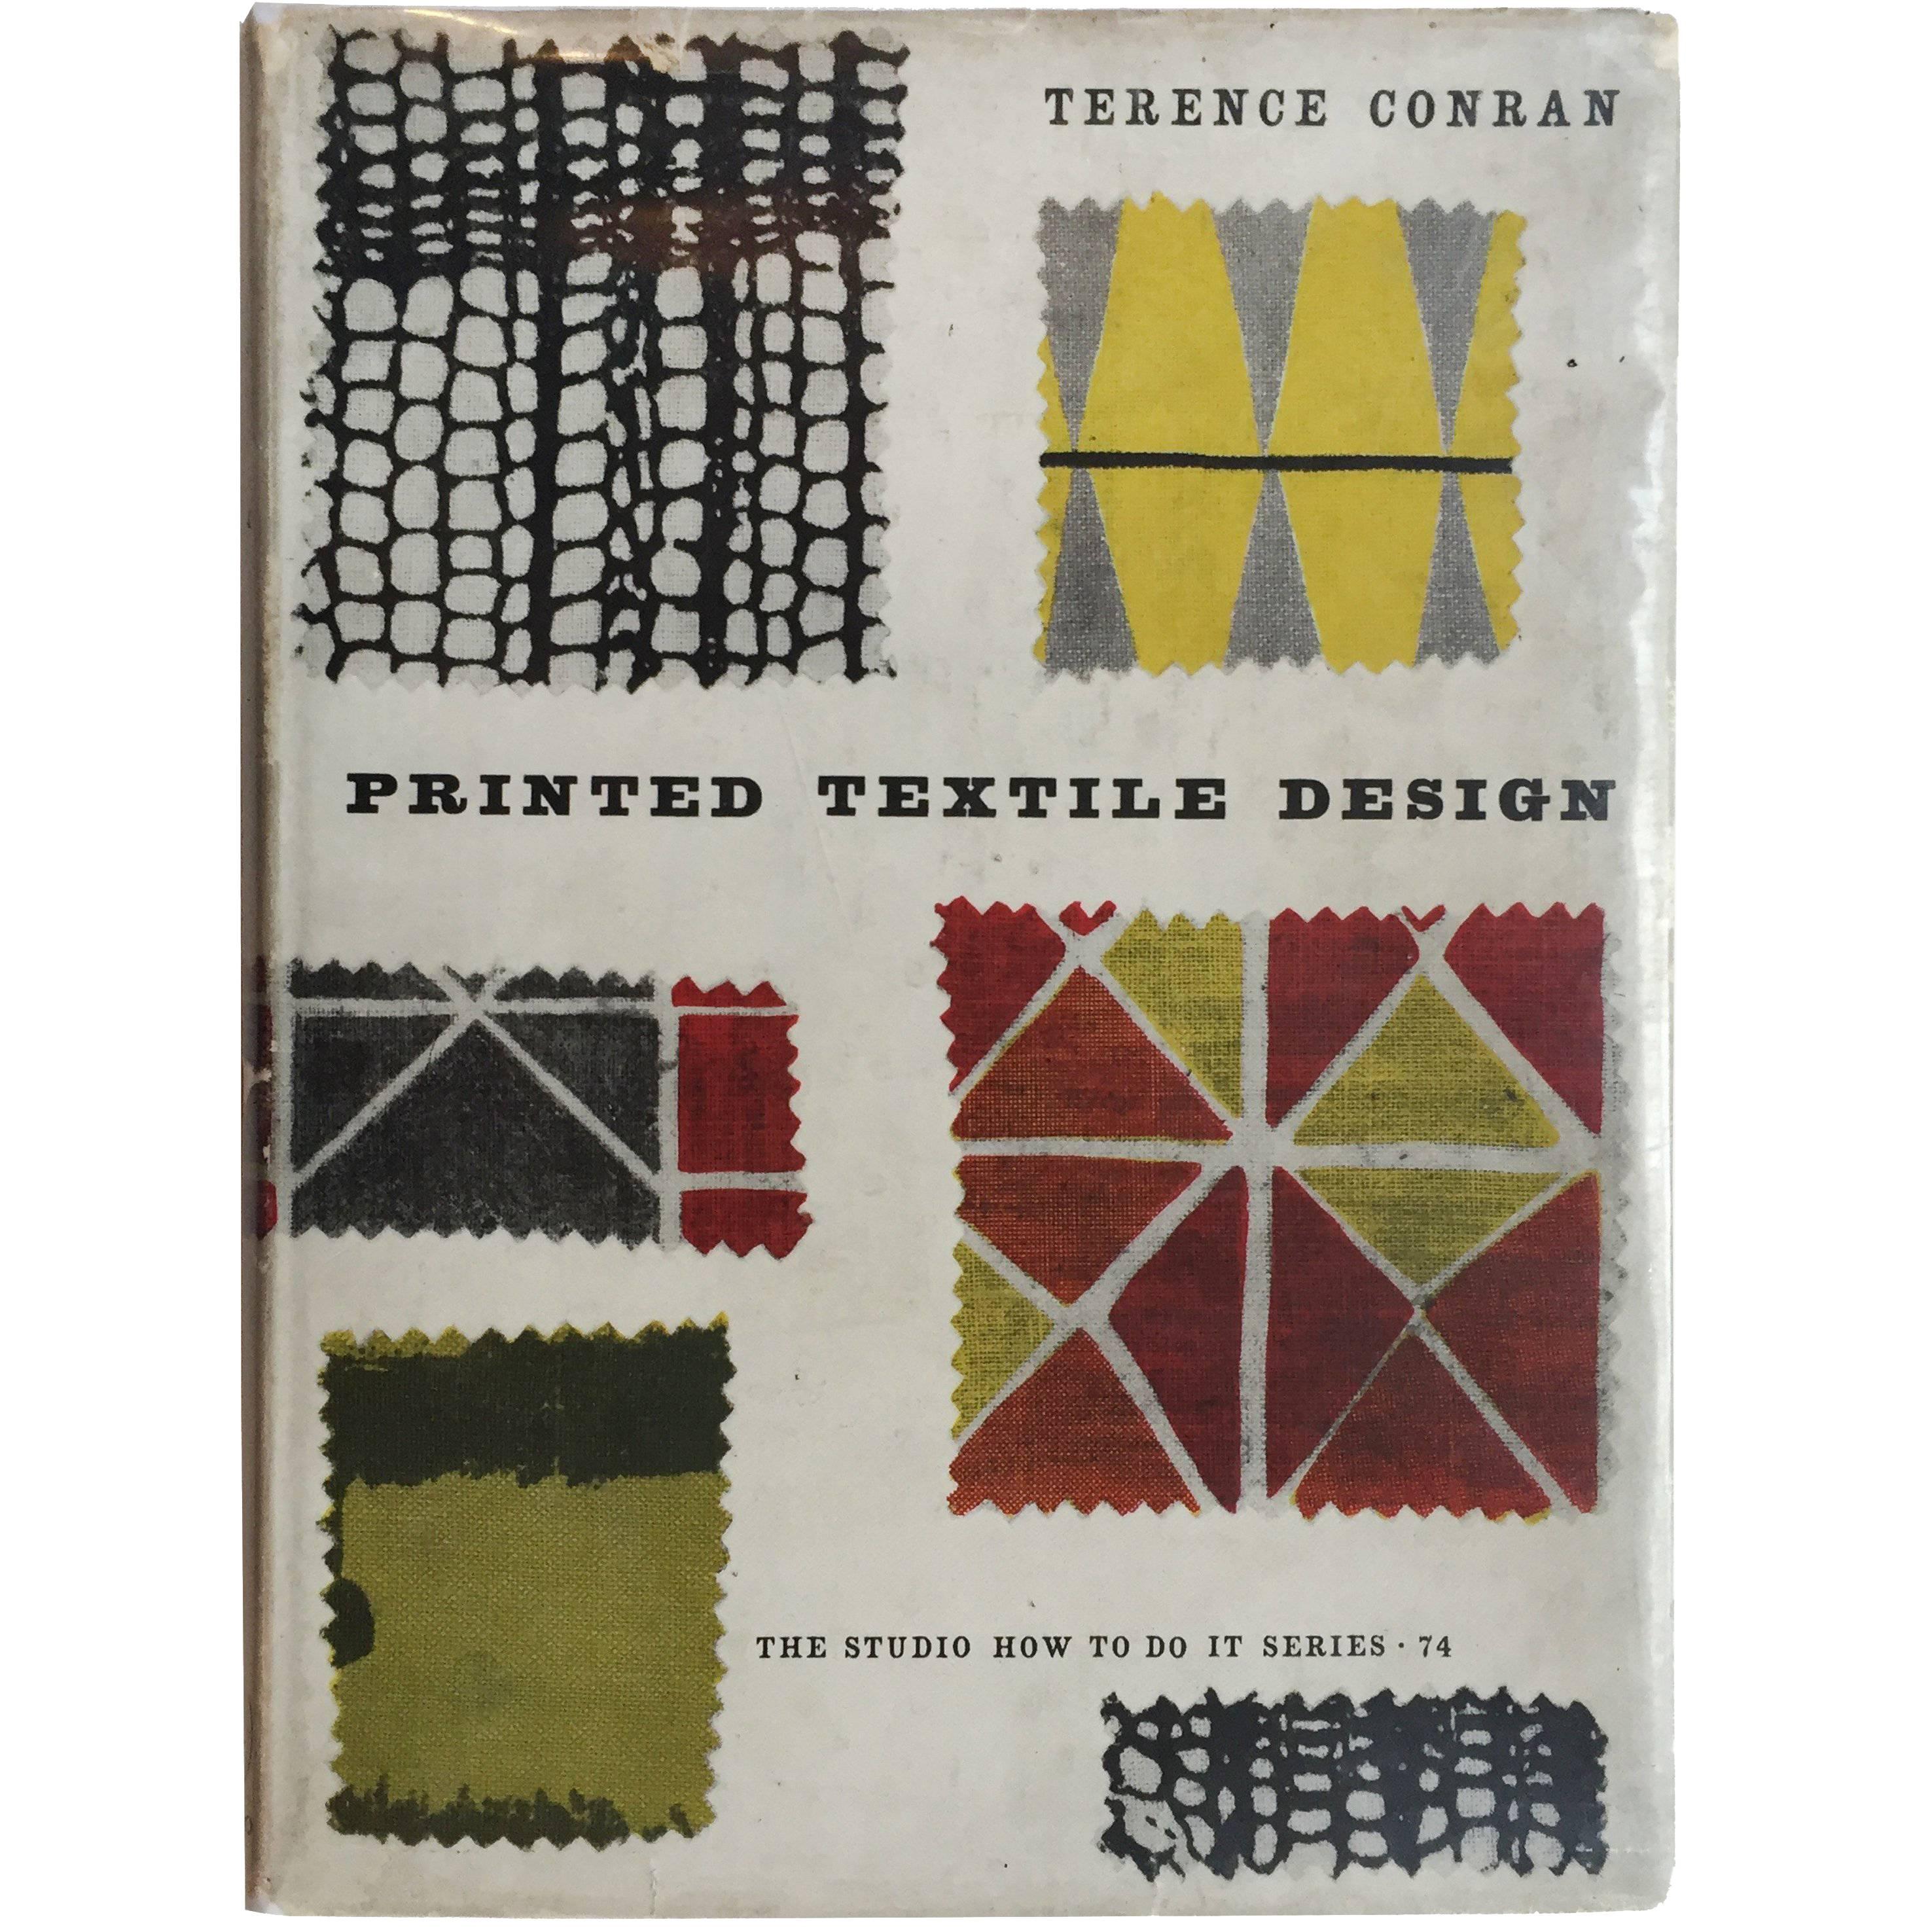 Terence Conran, Printed Textile Design, 1957